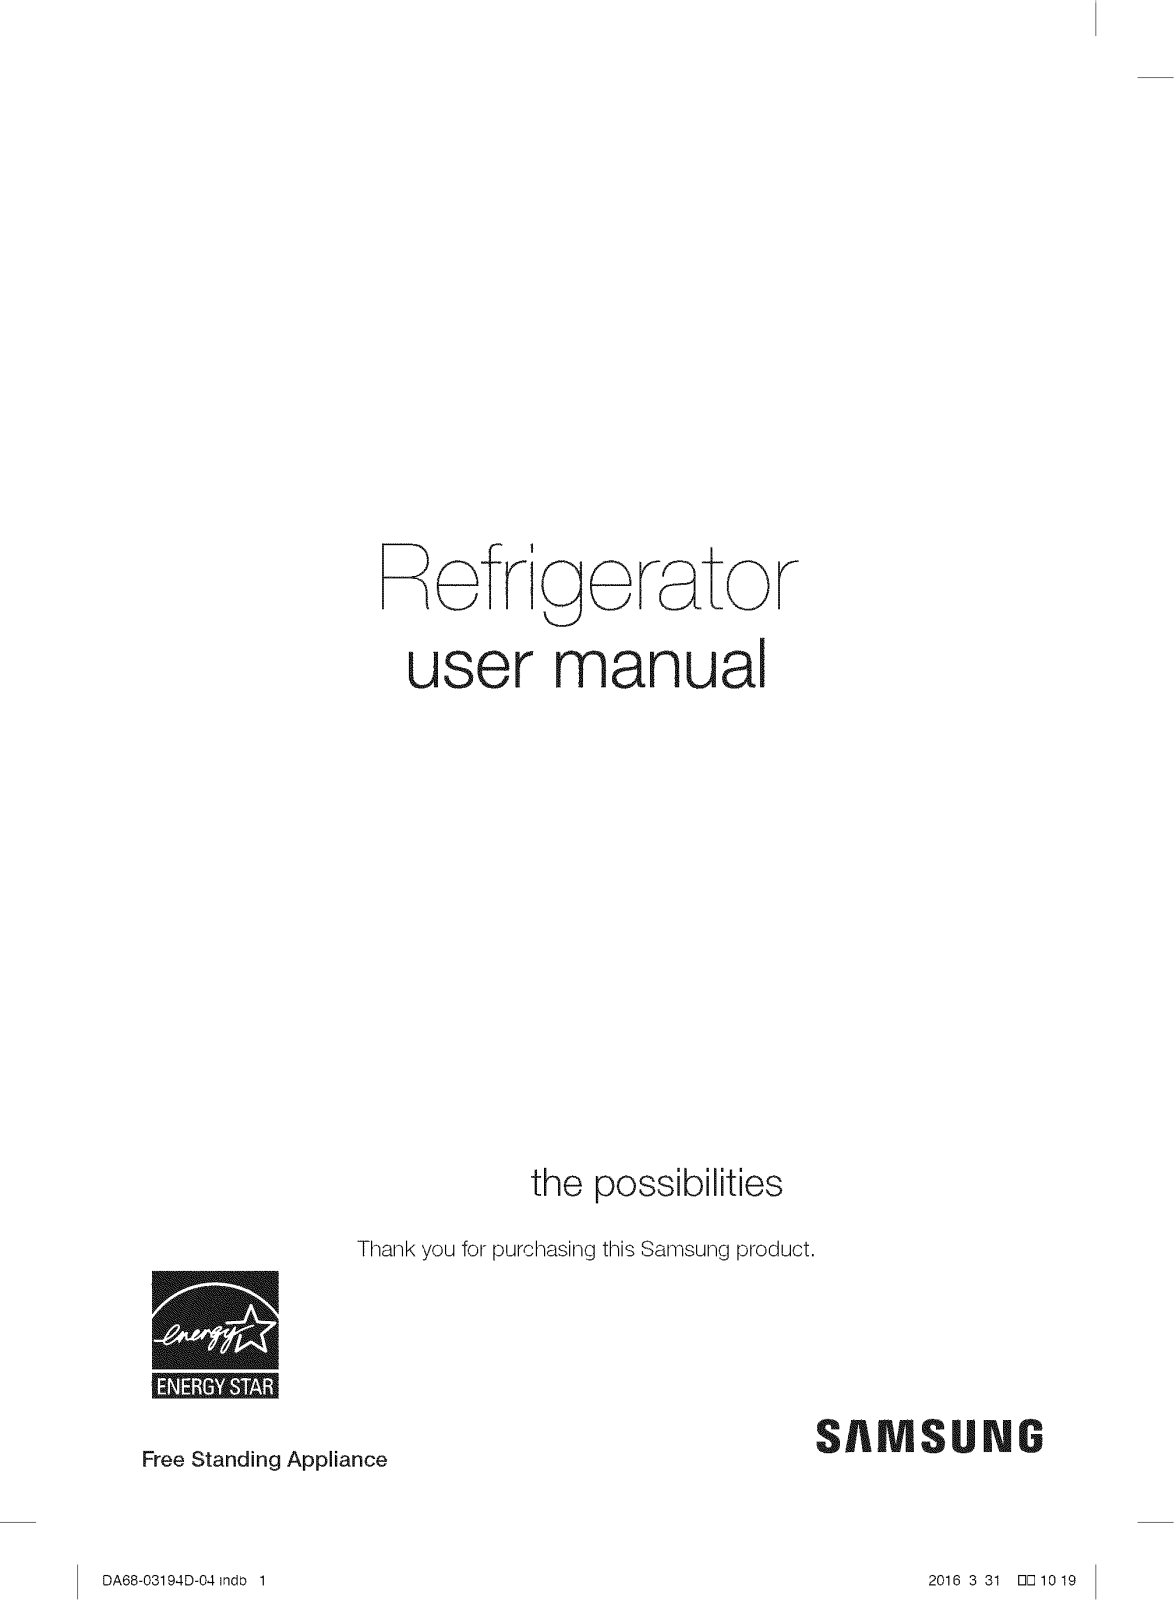 Samsung RF23J9011SR/AA-05, RF23J9011SG/AA-06, RF23J9011SG/AA-03, RF23J9011SR/AA-08, RF23J9011SR/AA-07 Owner’s Manual